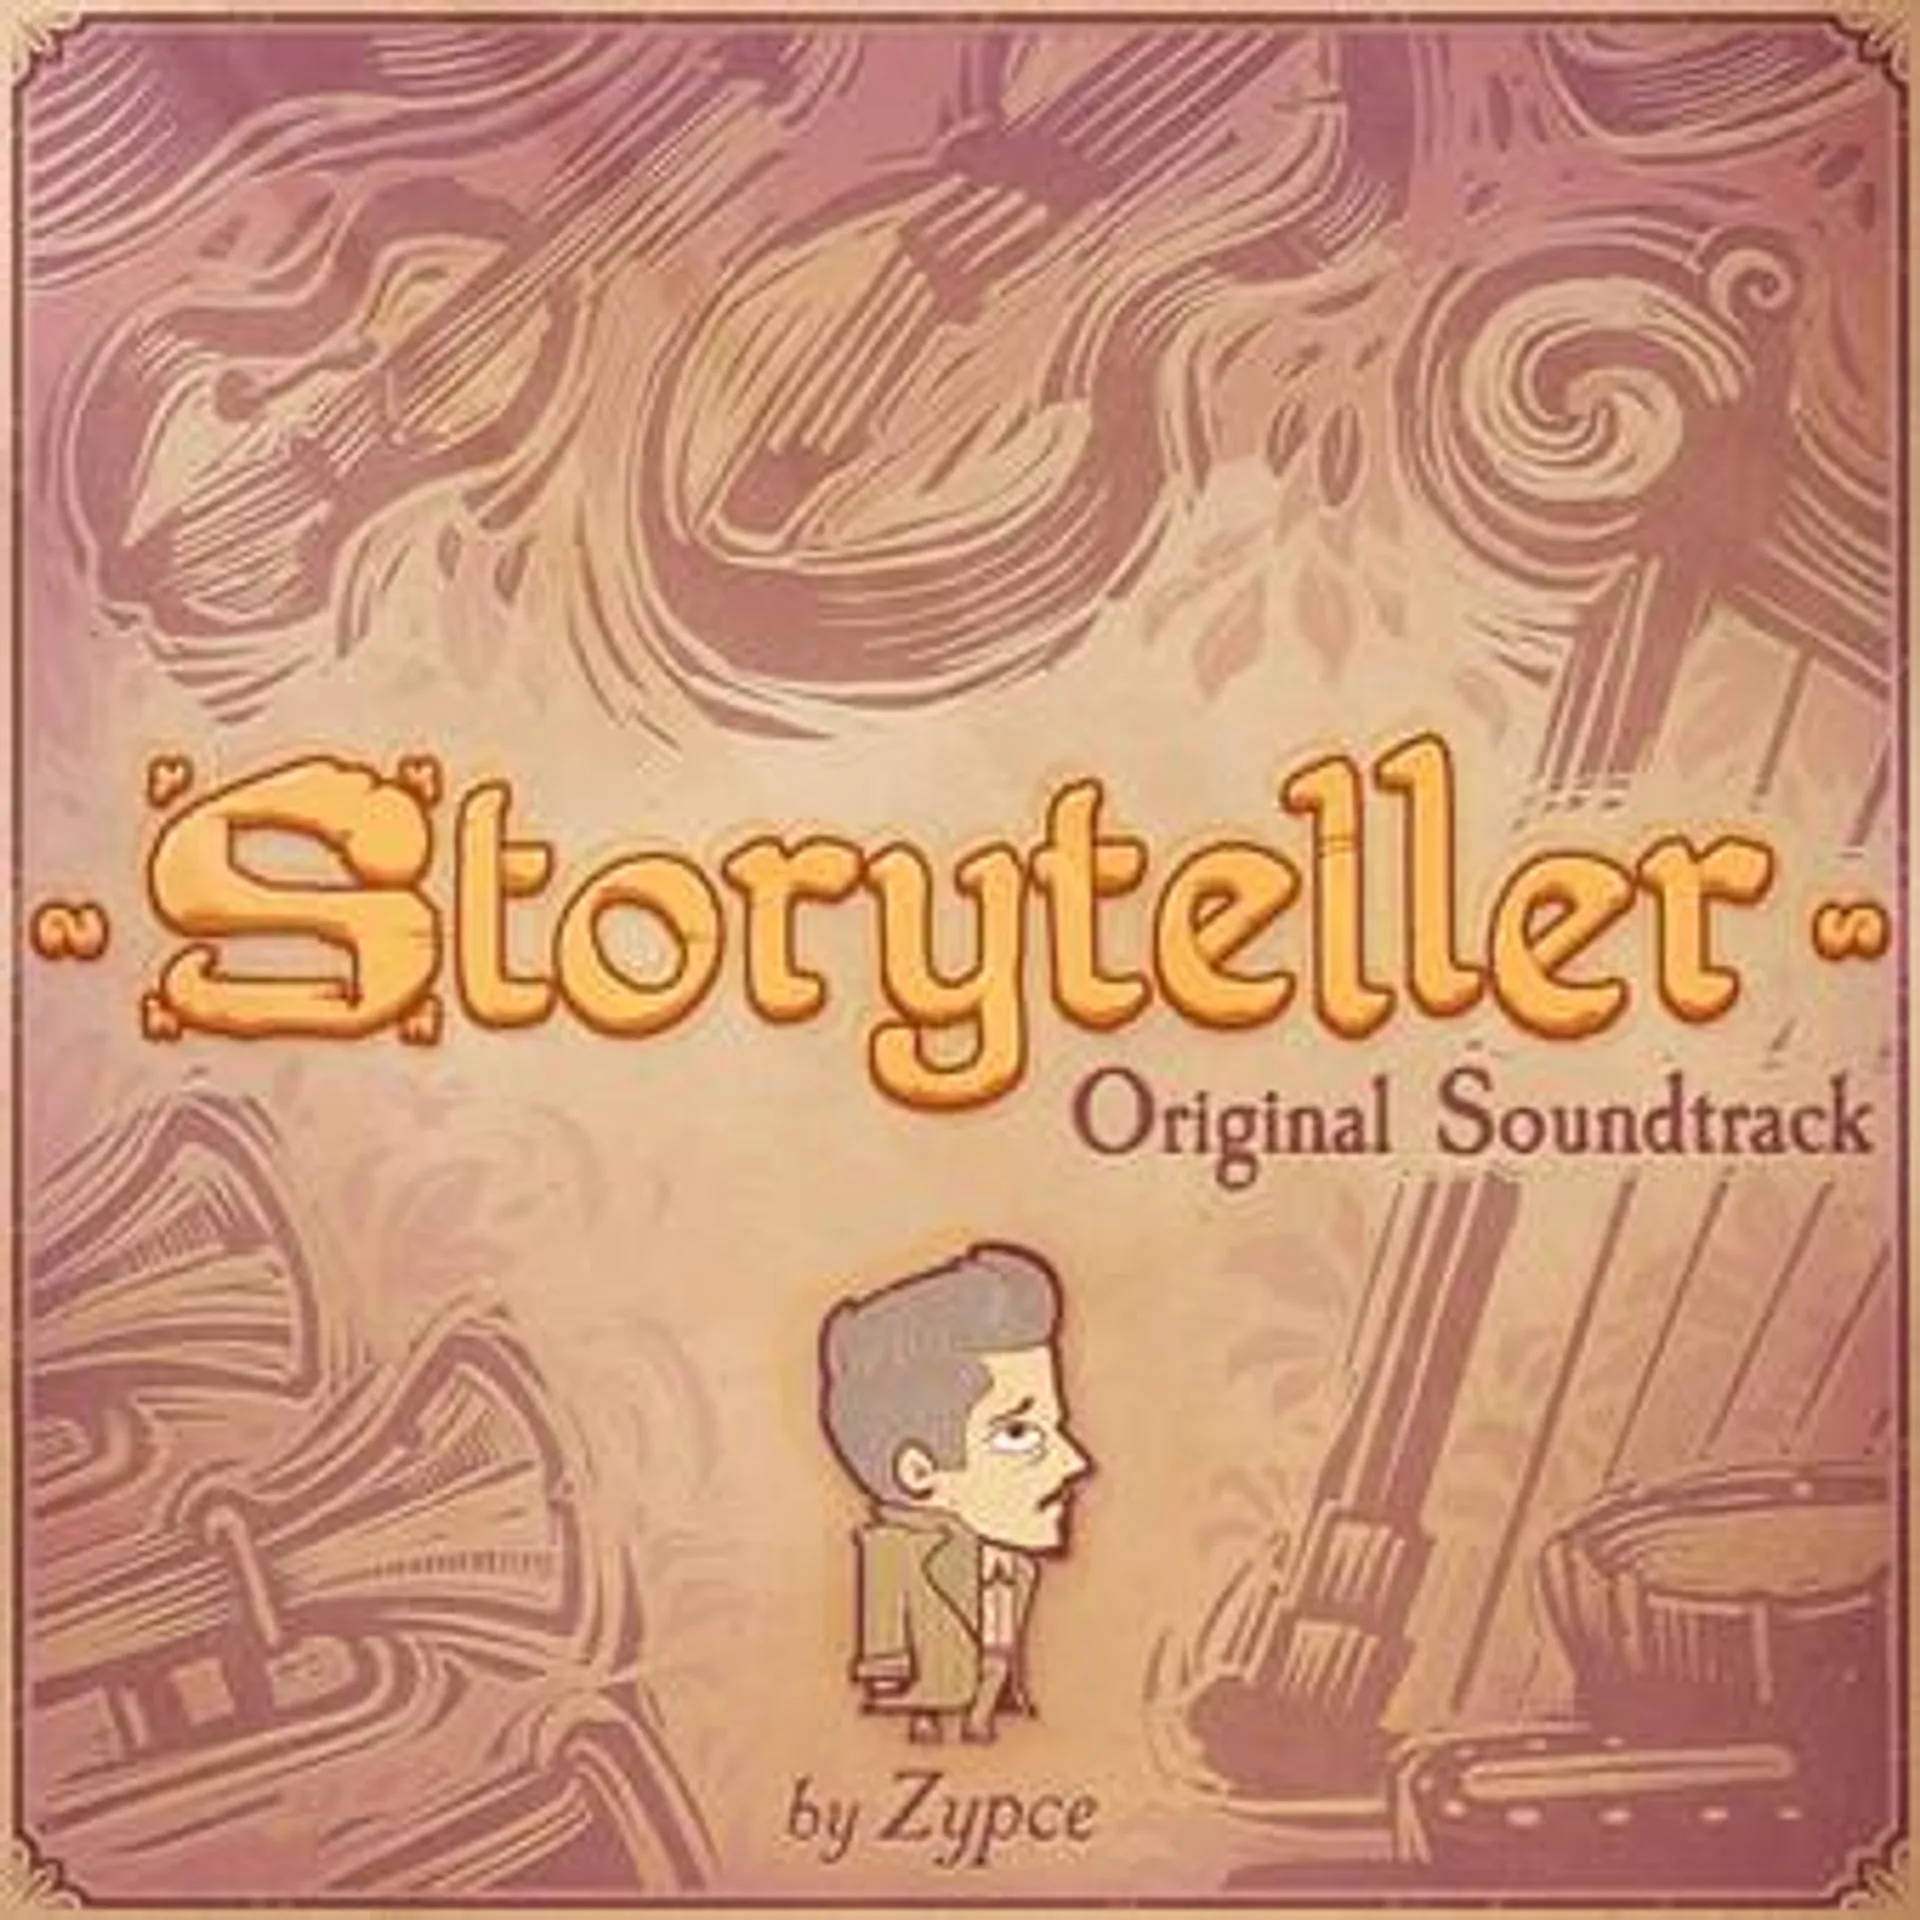 Storyteller - Original Soundtrack